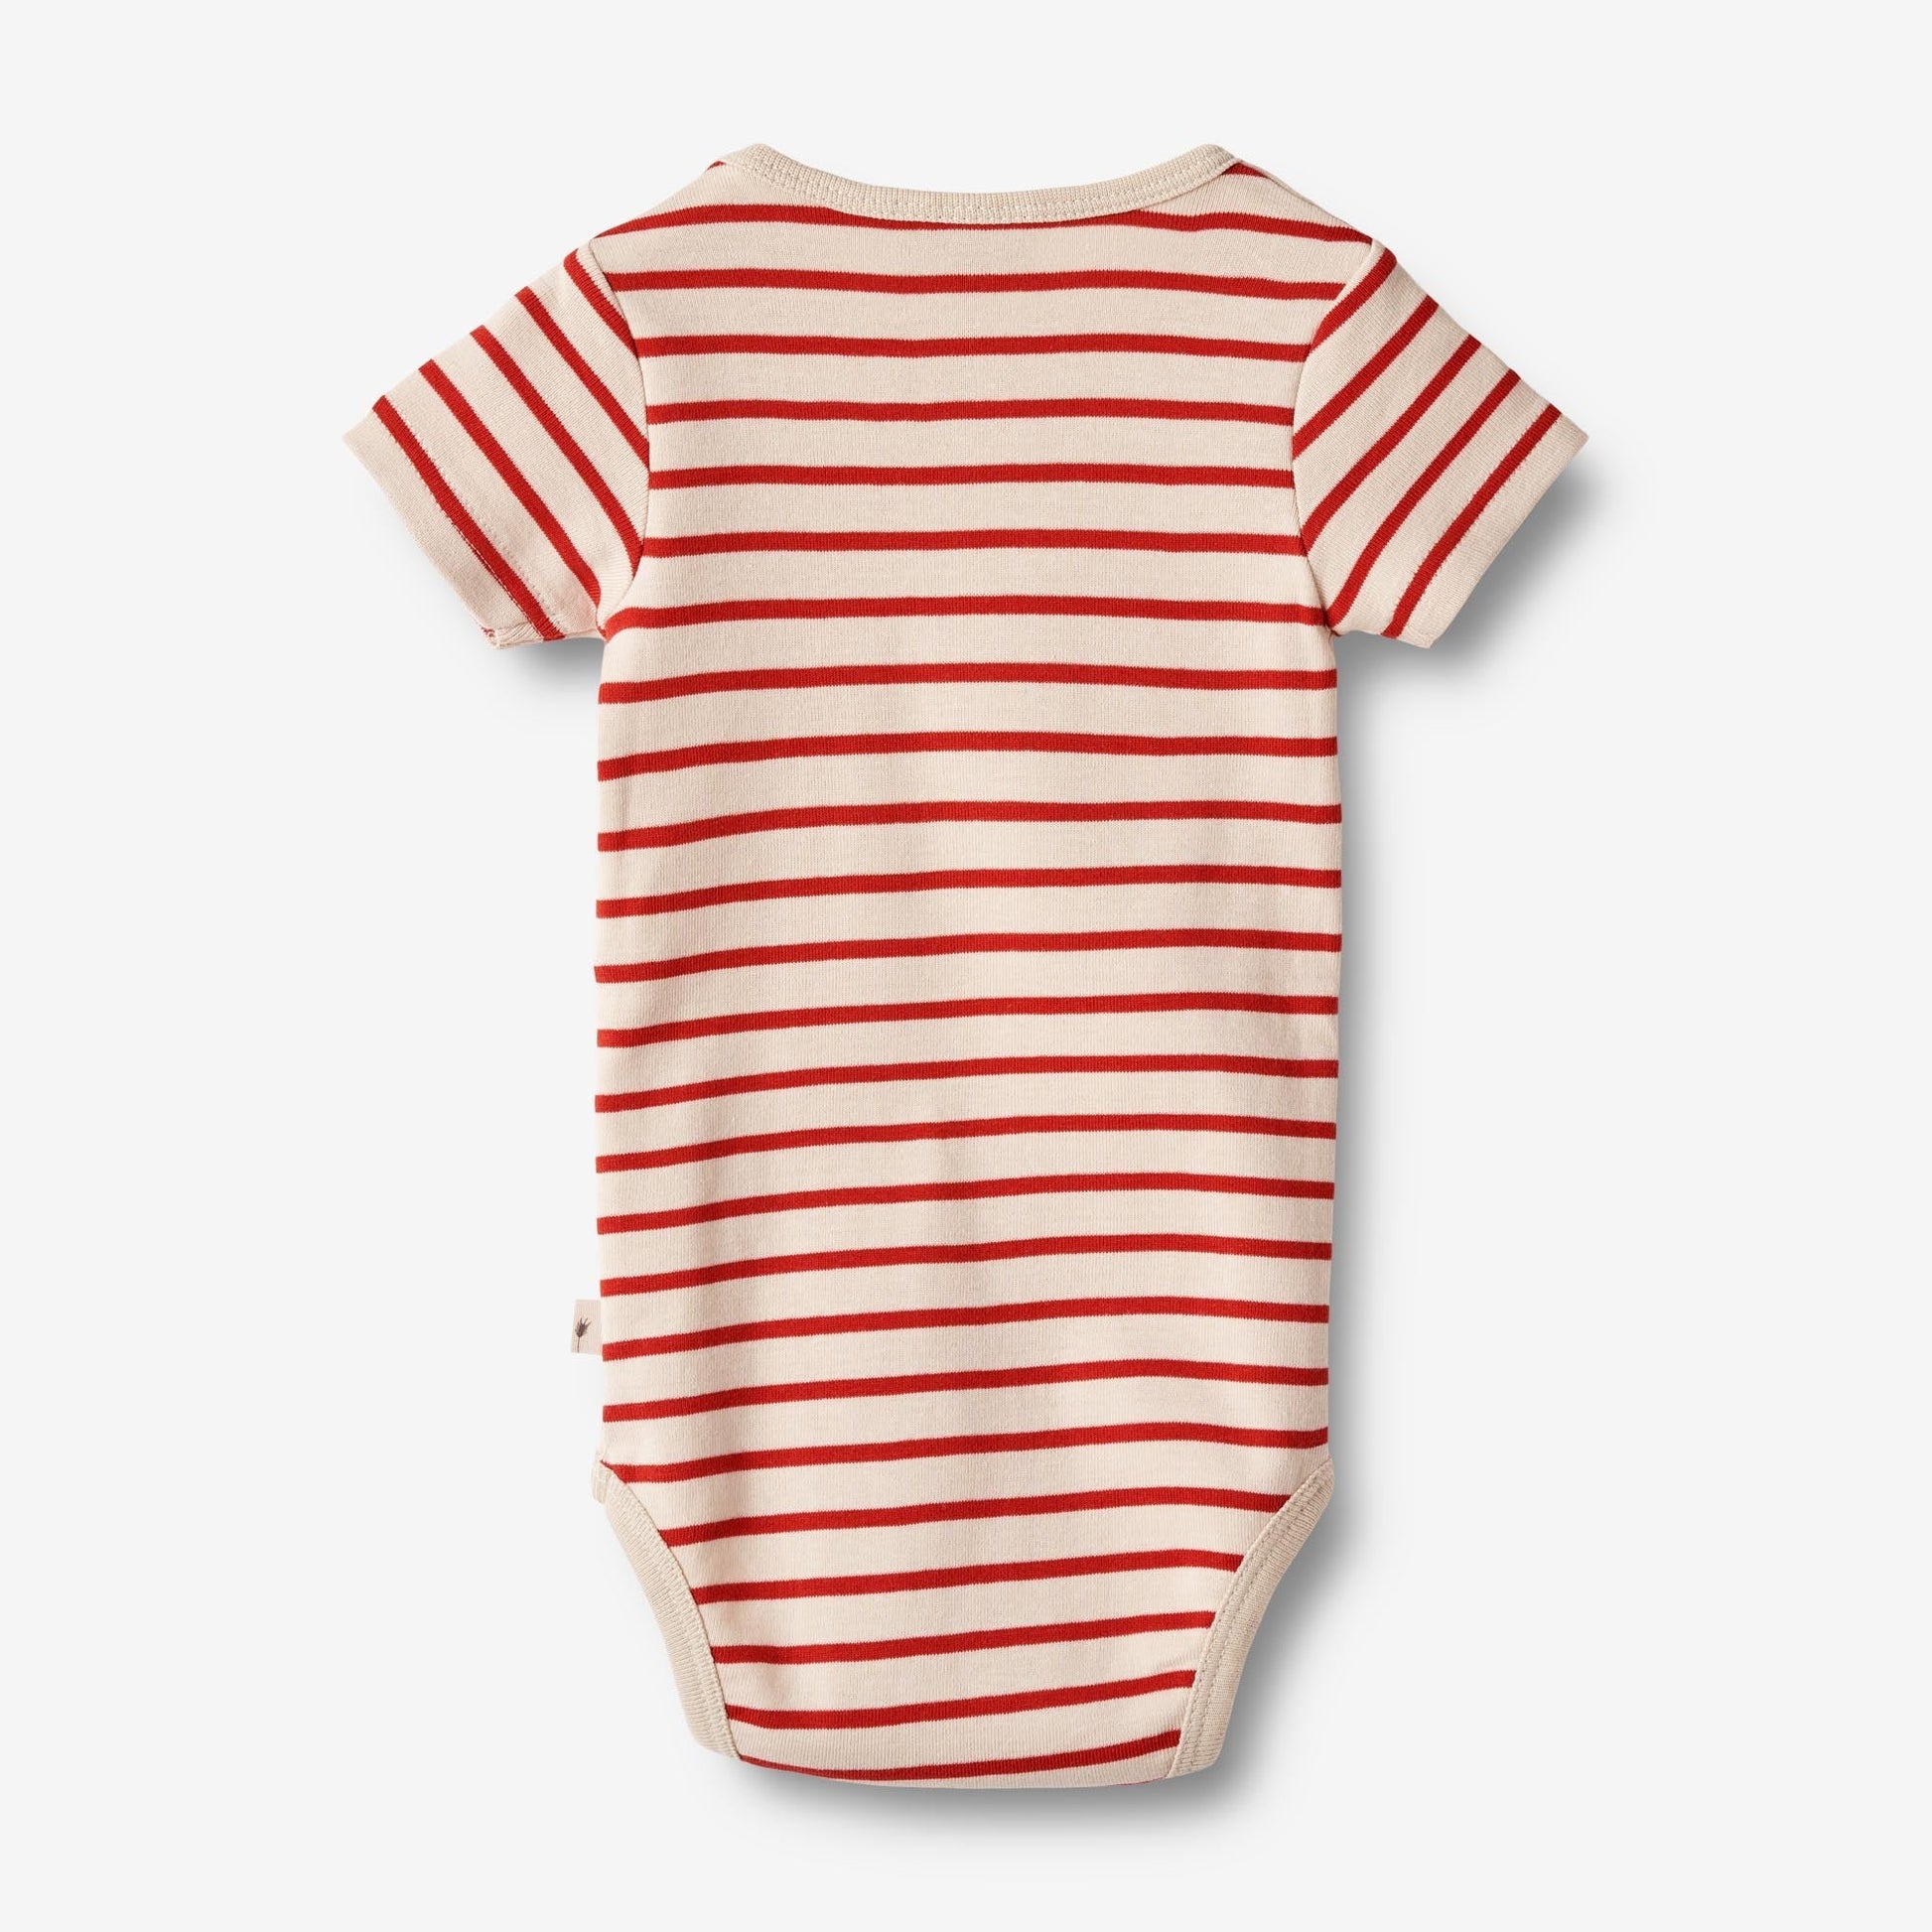 Wheat 'Edvald' S/S Baby Body - Red Stripe